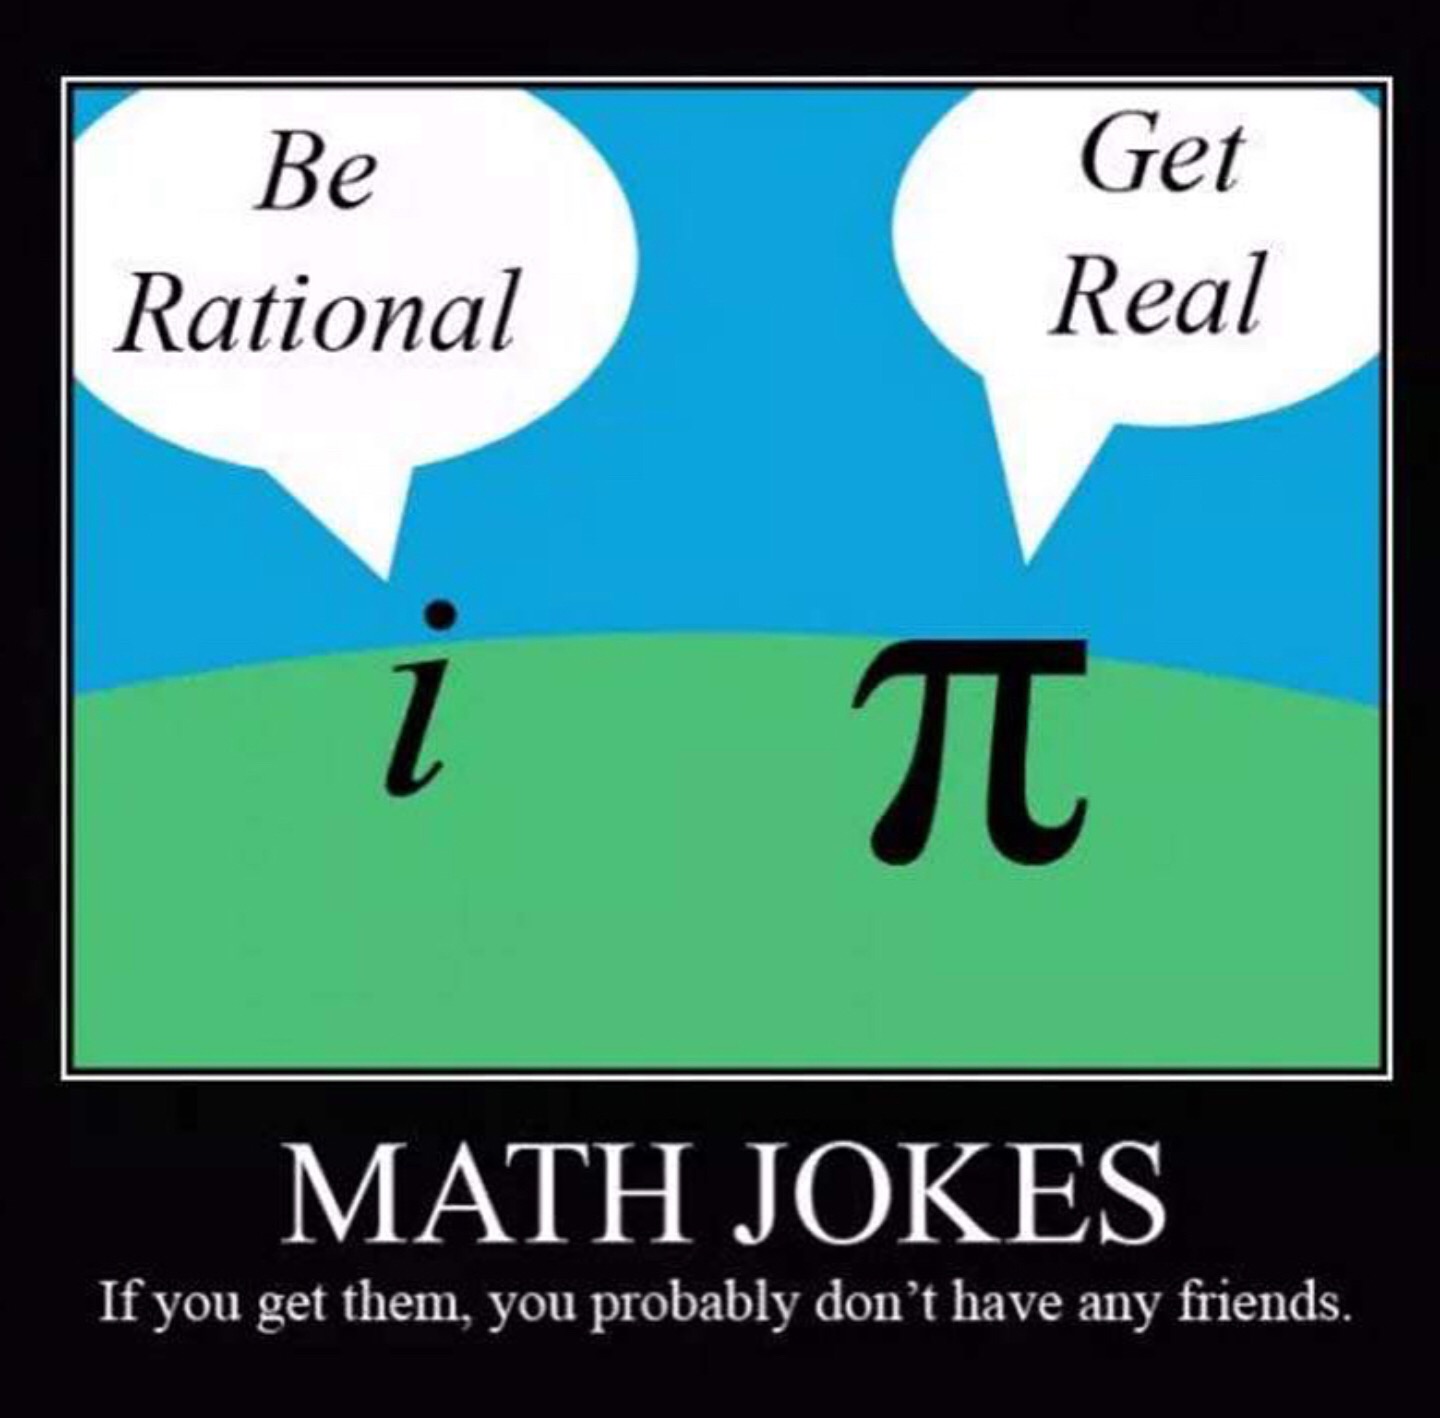 Get a joke. Math jokes. Математические шутки. Математические шутки и приколы. Be Rational get real.